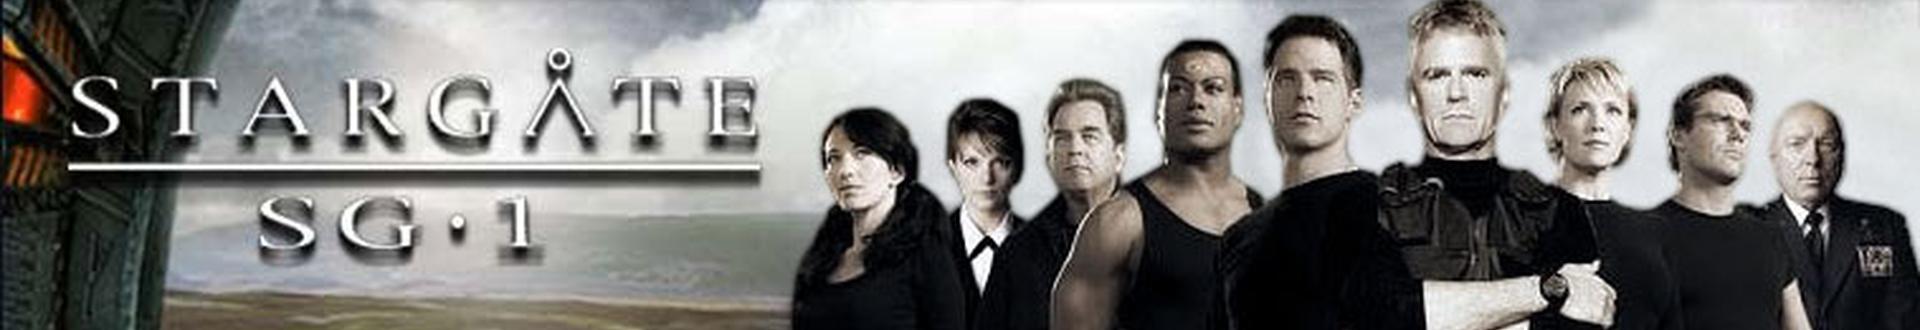 Image illustrative de Stargate SG-1